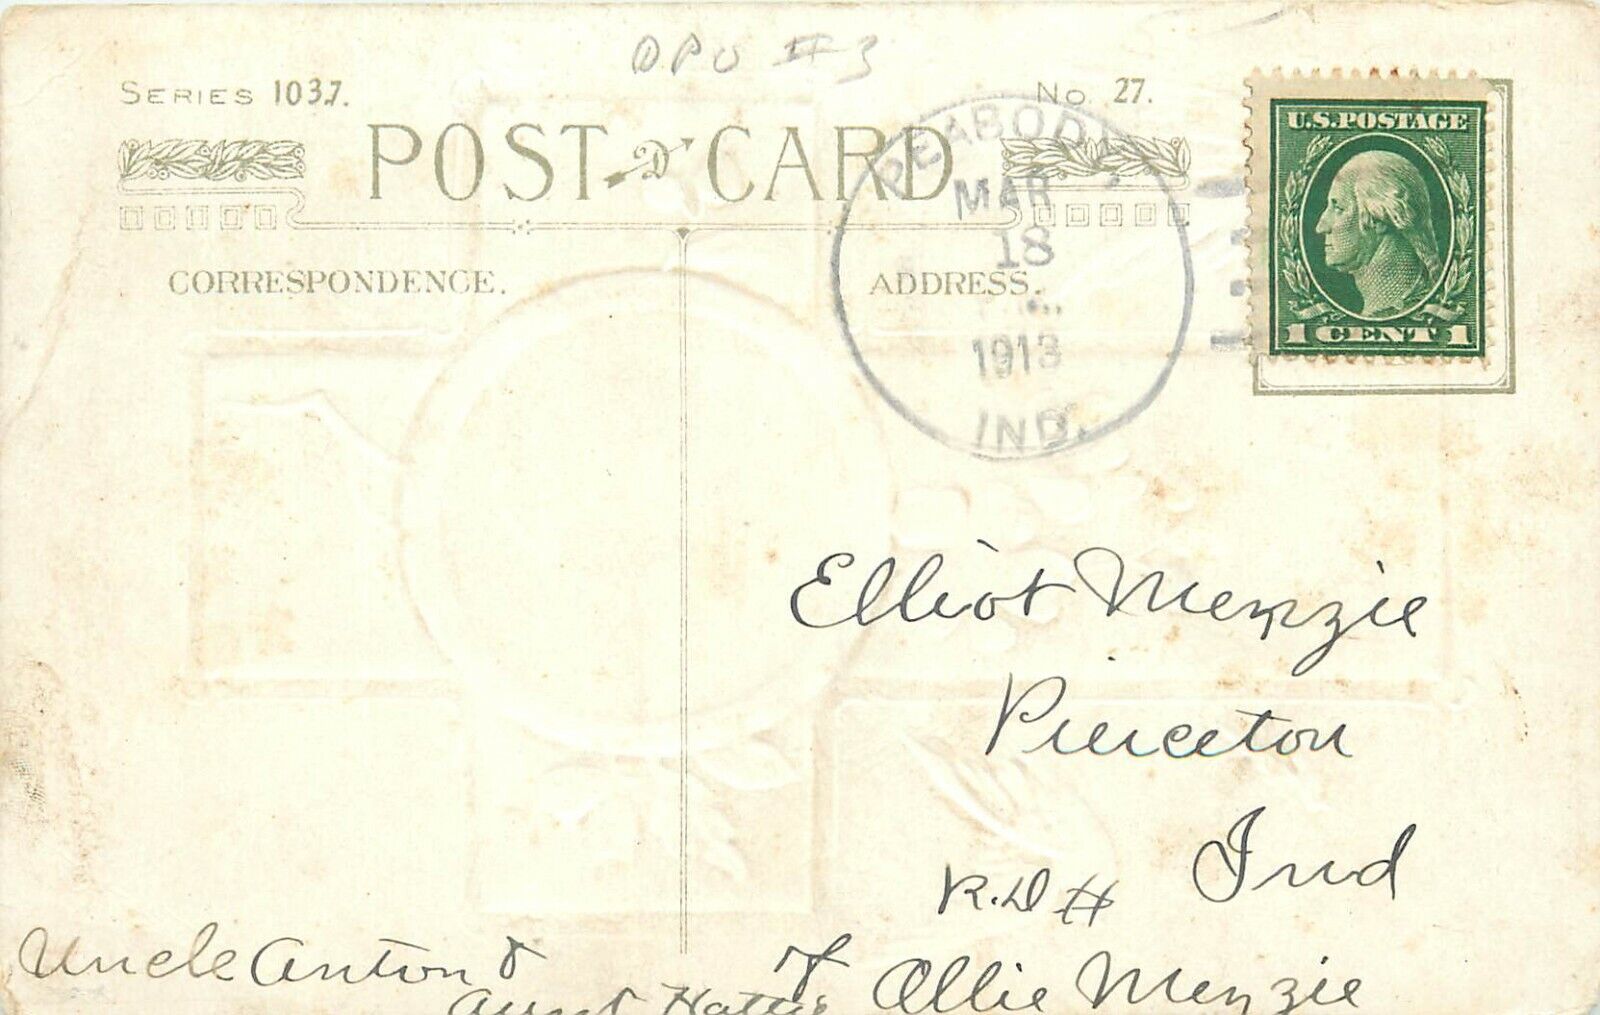 c1910 Easter Postcard Series 1037, DPO 3 Cancellation Peabody IN Washington Twp